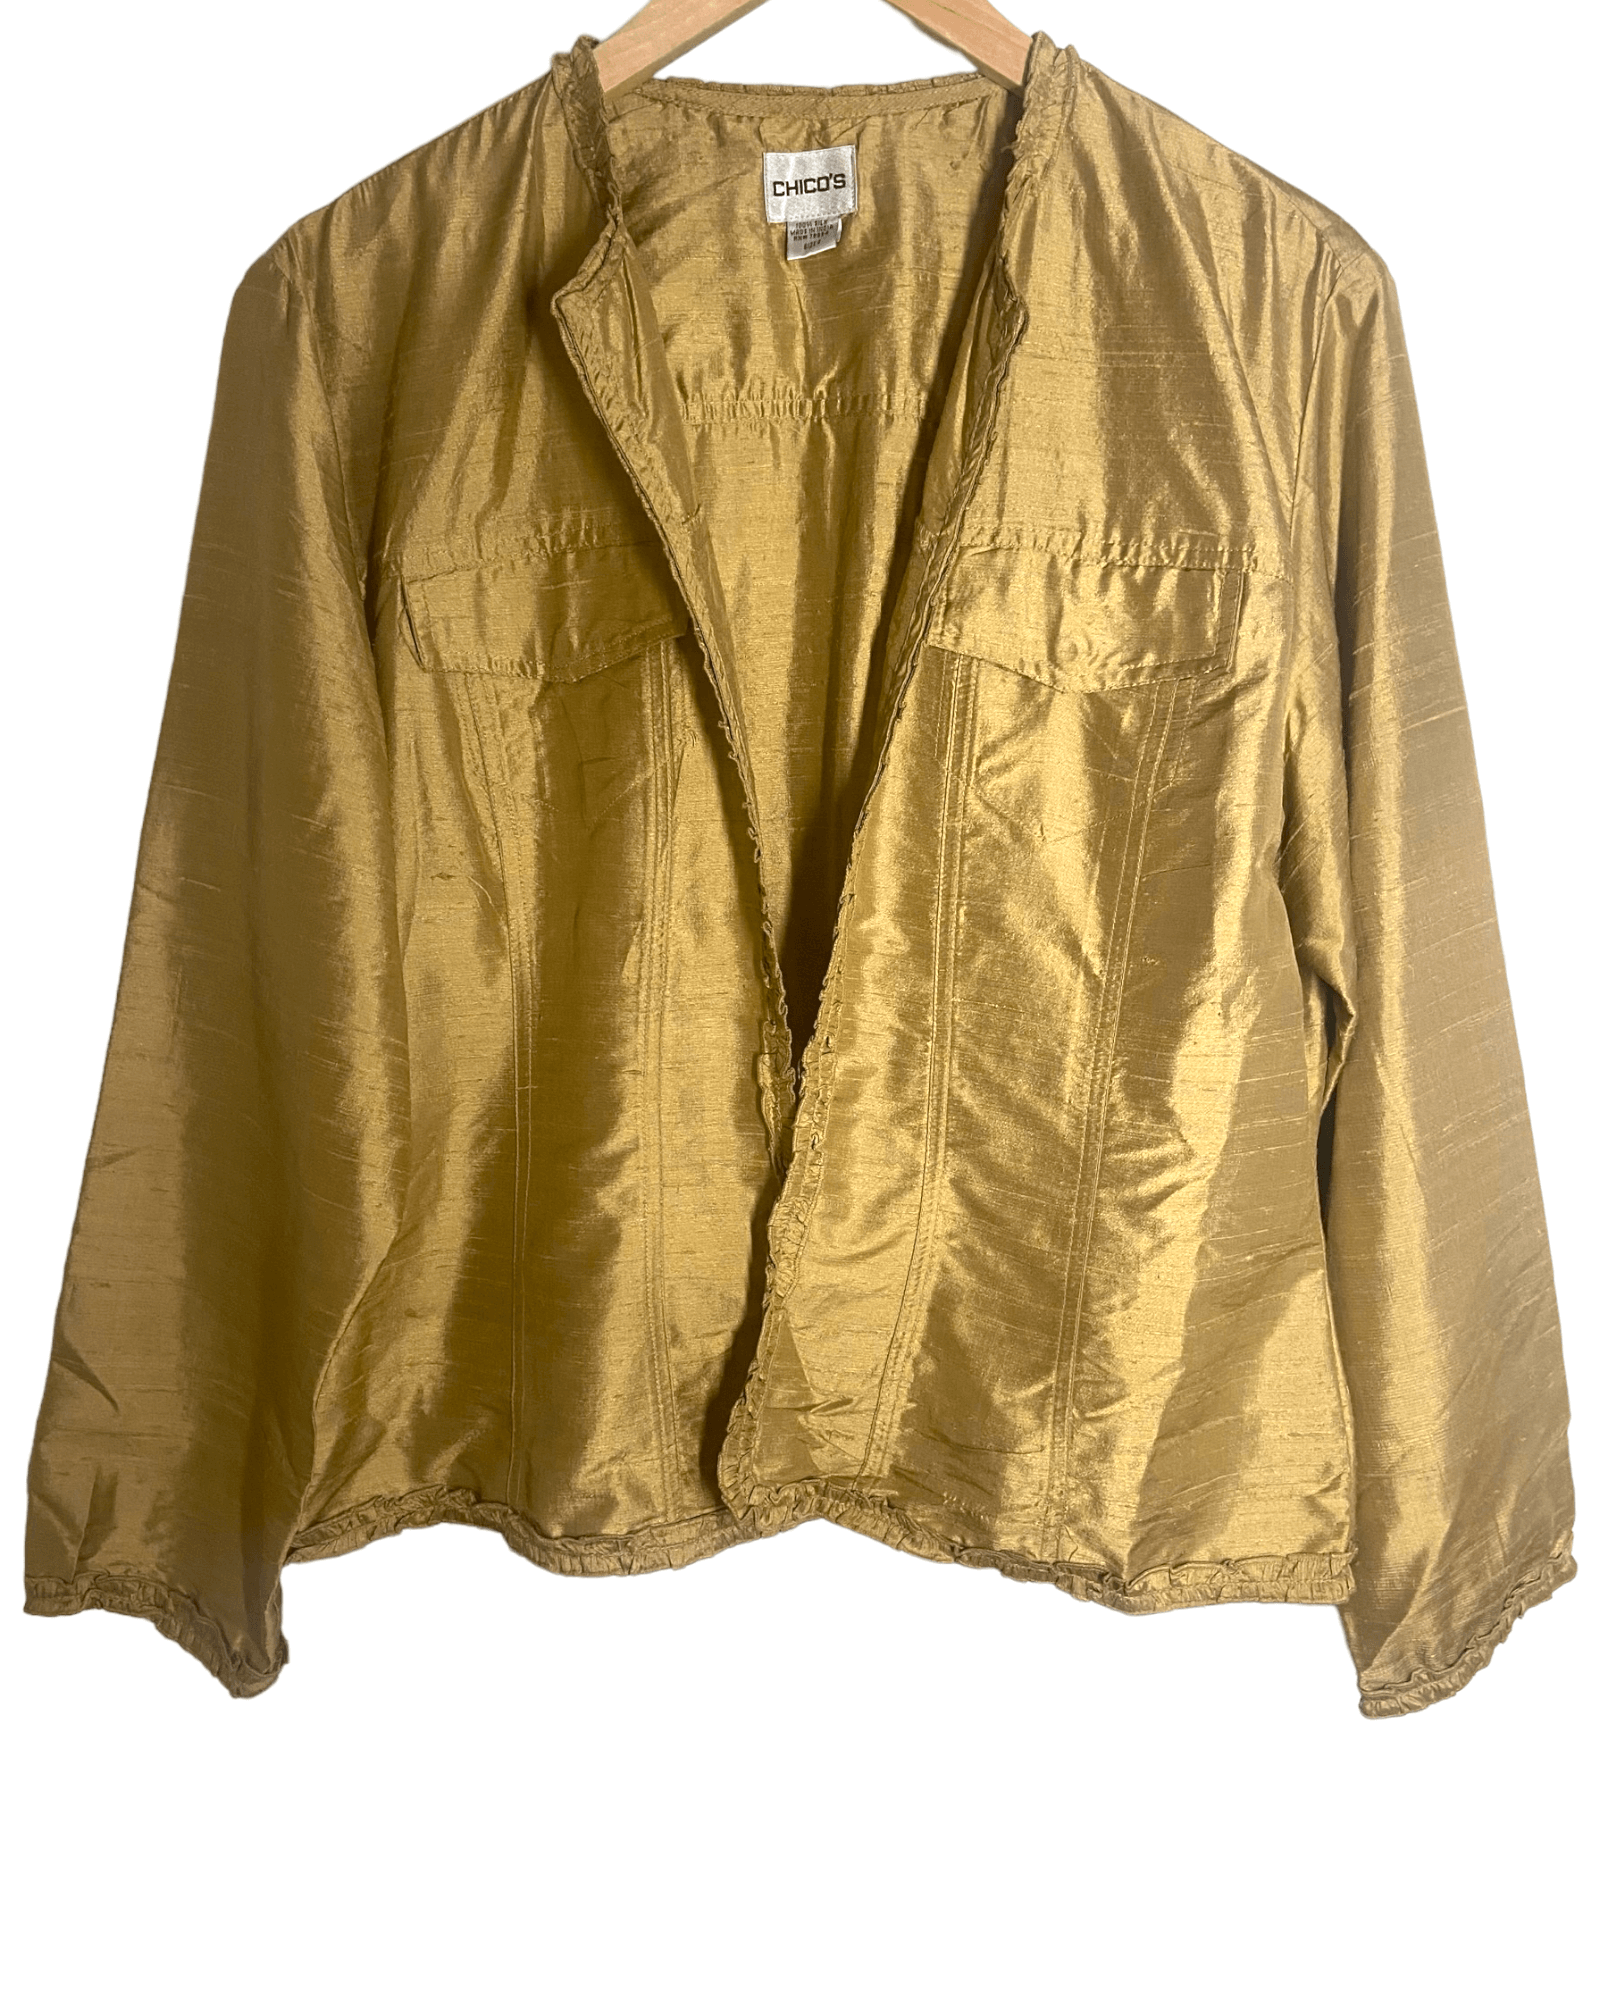 Dark Autumn CHICO'S gold silk ruffle jacket